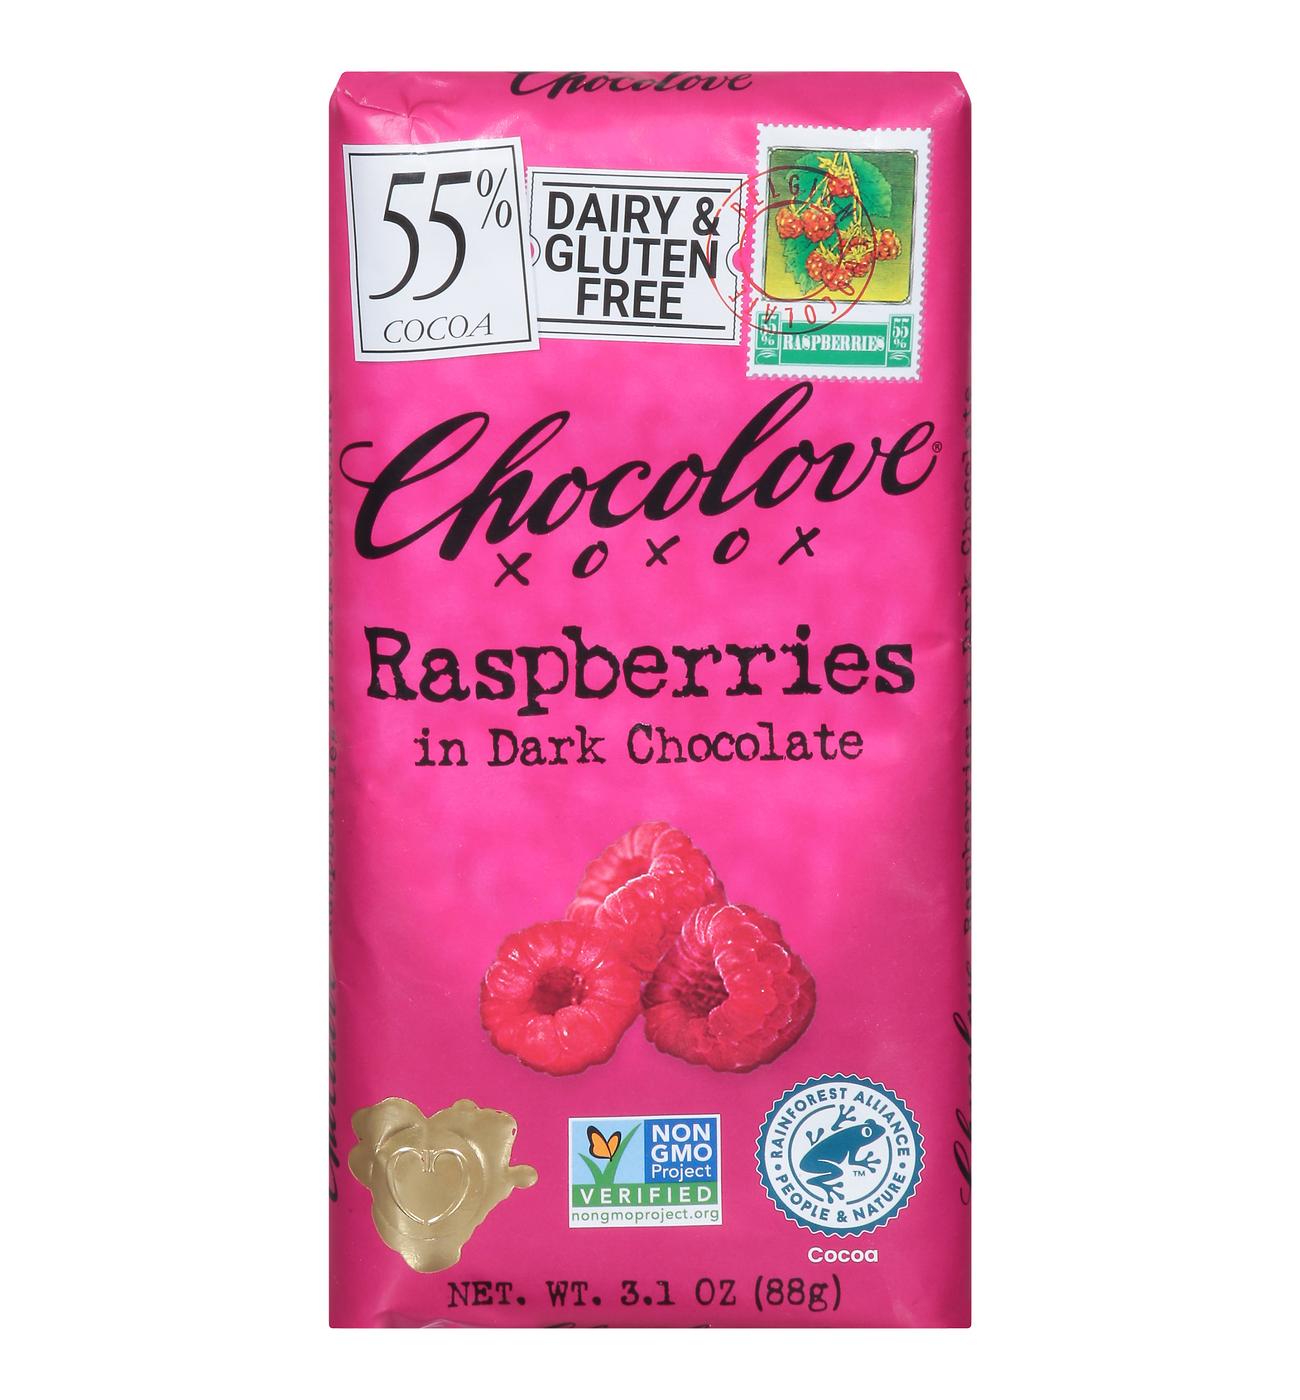 Chocolove Raspberries in Dark Chocolate Candy Bar; image 1 of 2